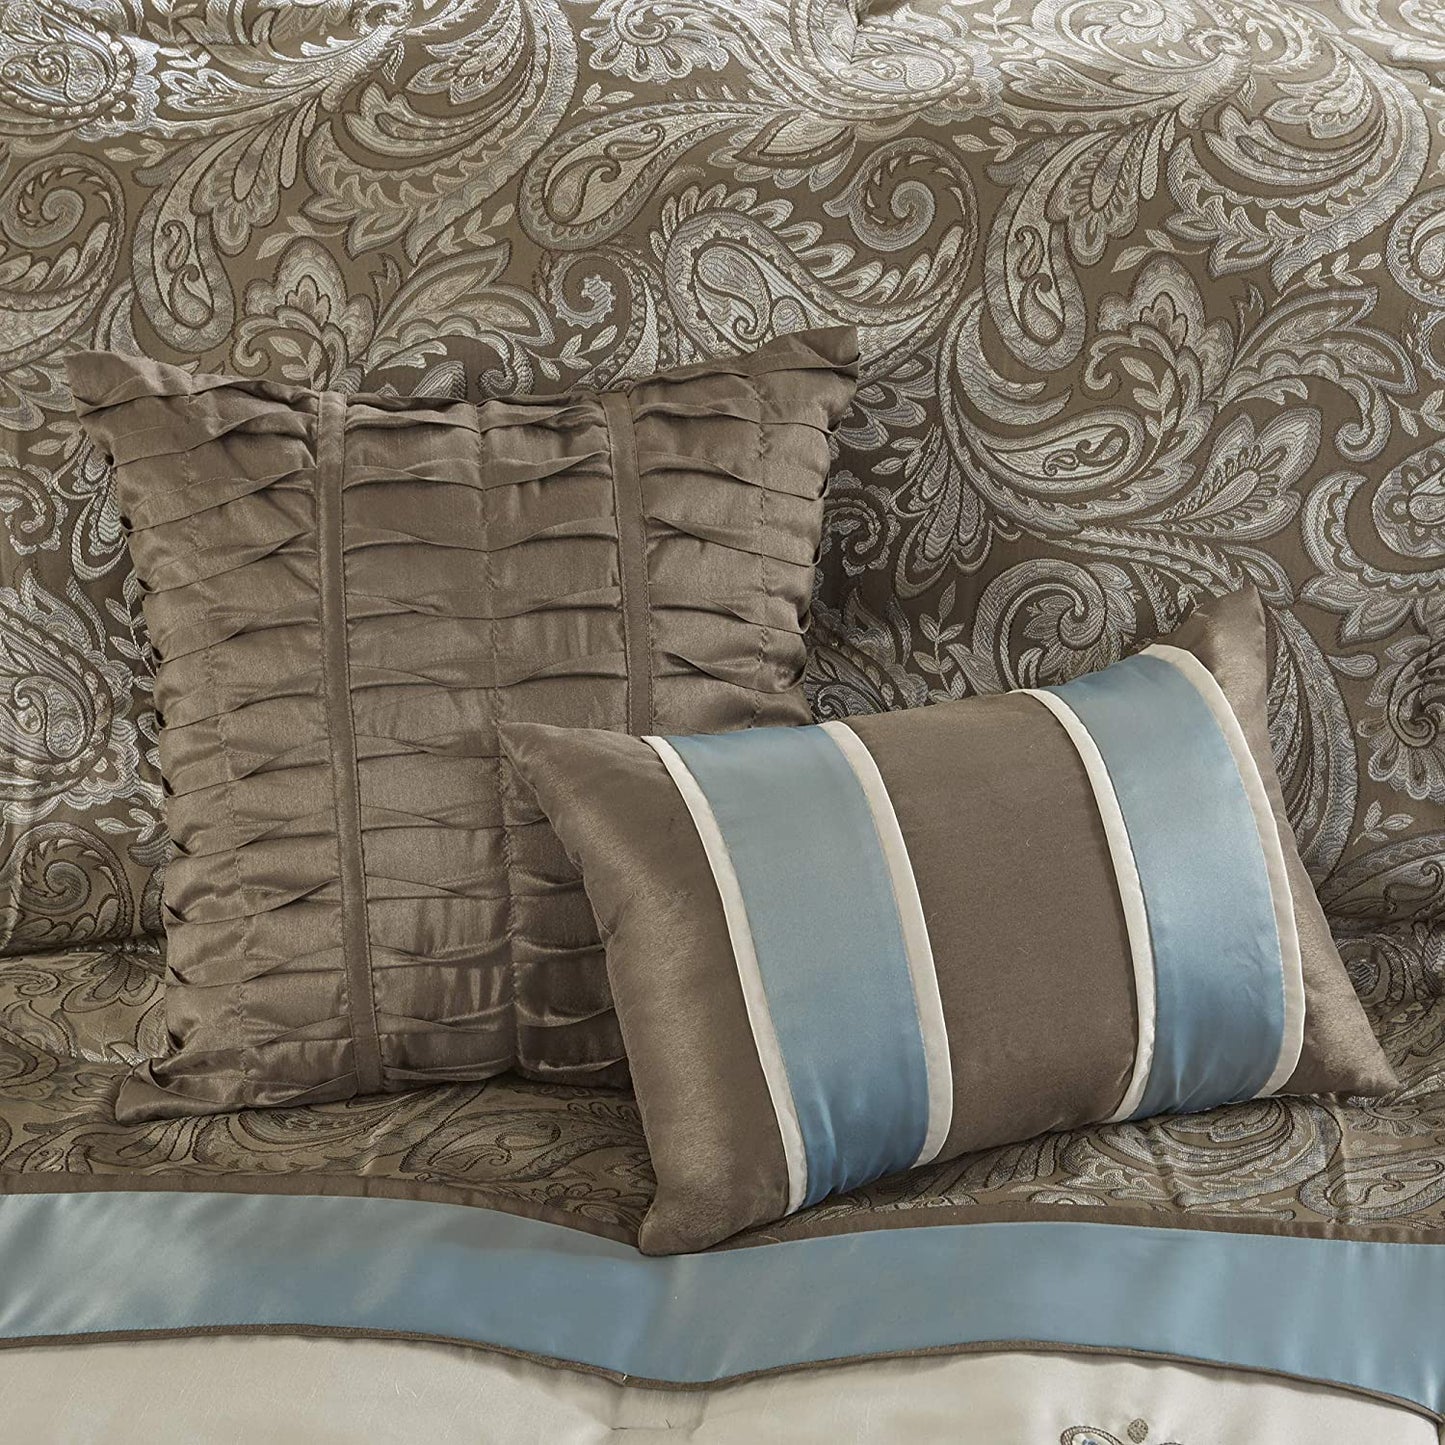 Caroline Blue 7-Piece Comforter Set Comforter Sets By Olliix/JLA HOME (E & E Co., Ltd)